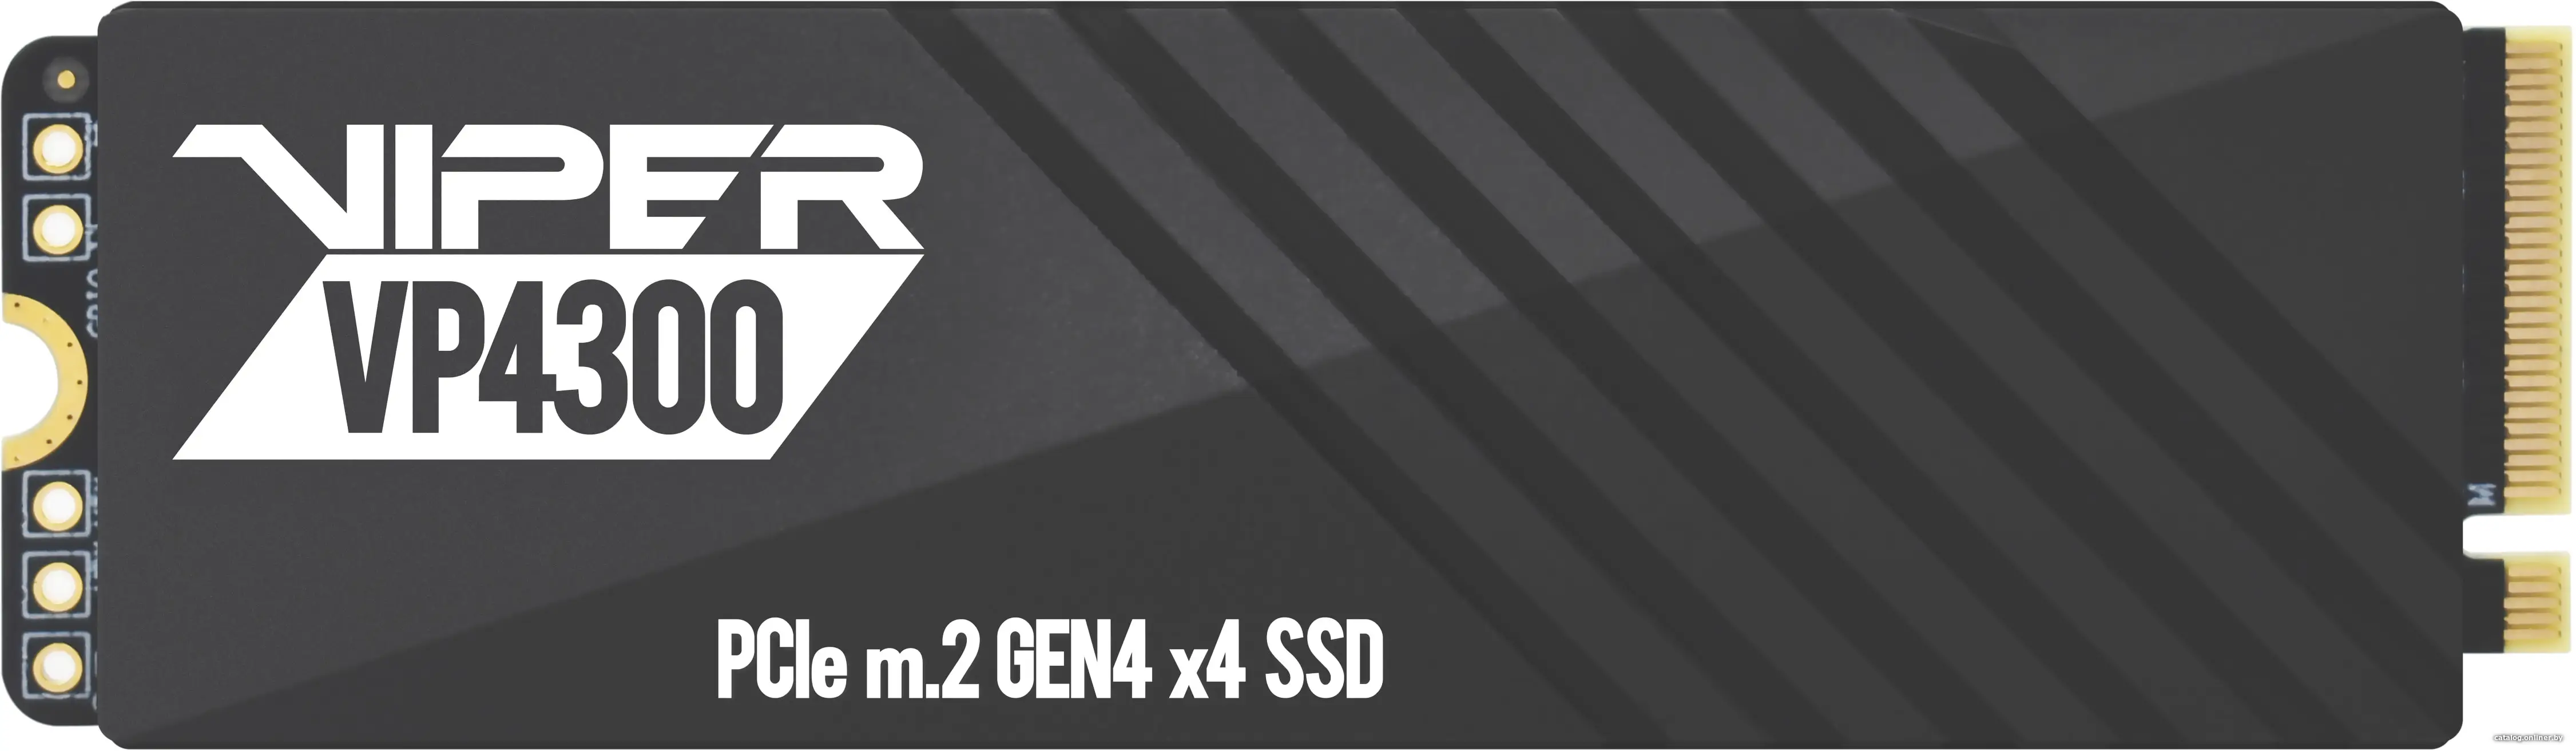 Купить SSD диск Patriot Viper VP4300 1TB (VP4300-1TBM28H), цена, опт и розница